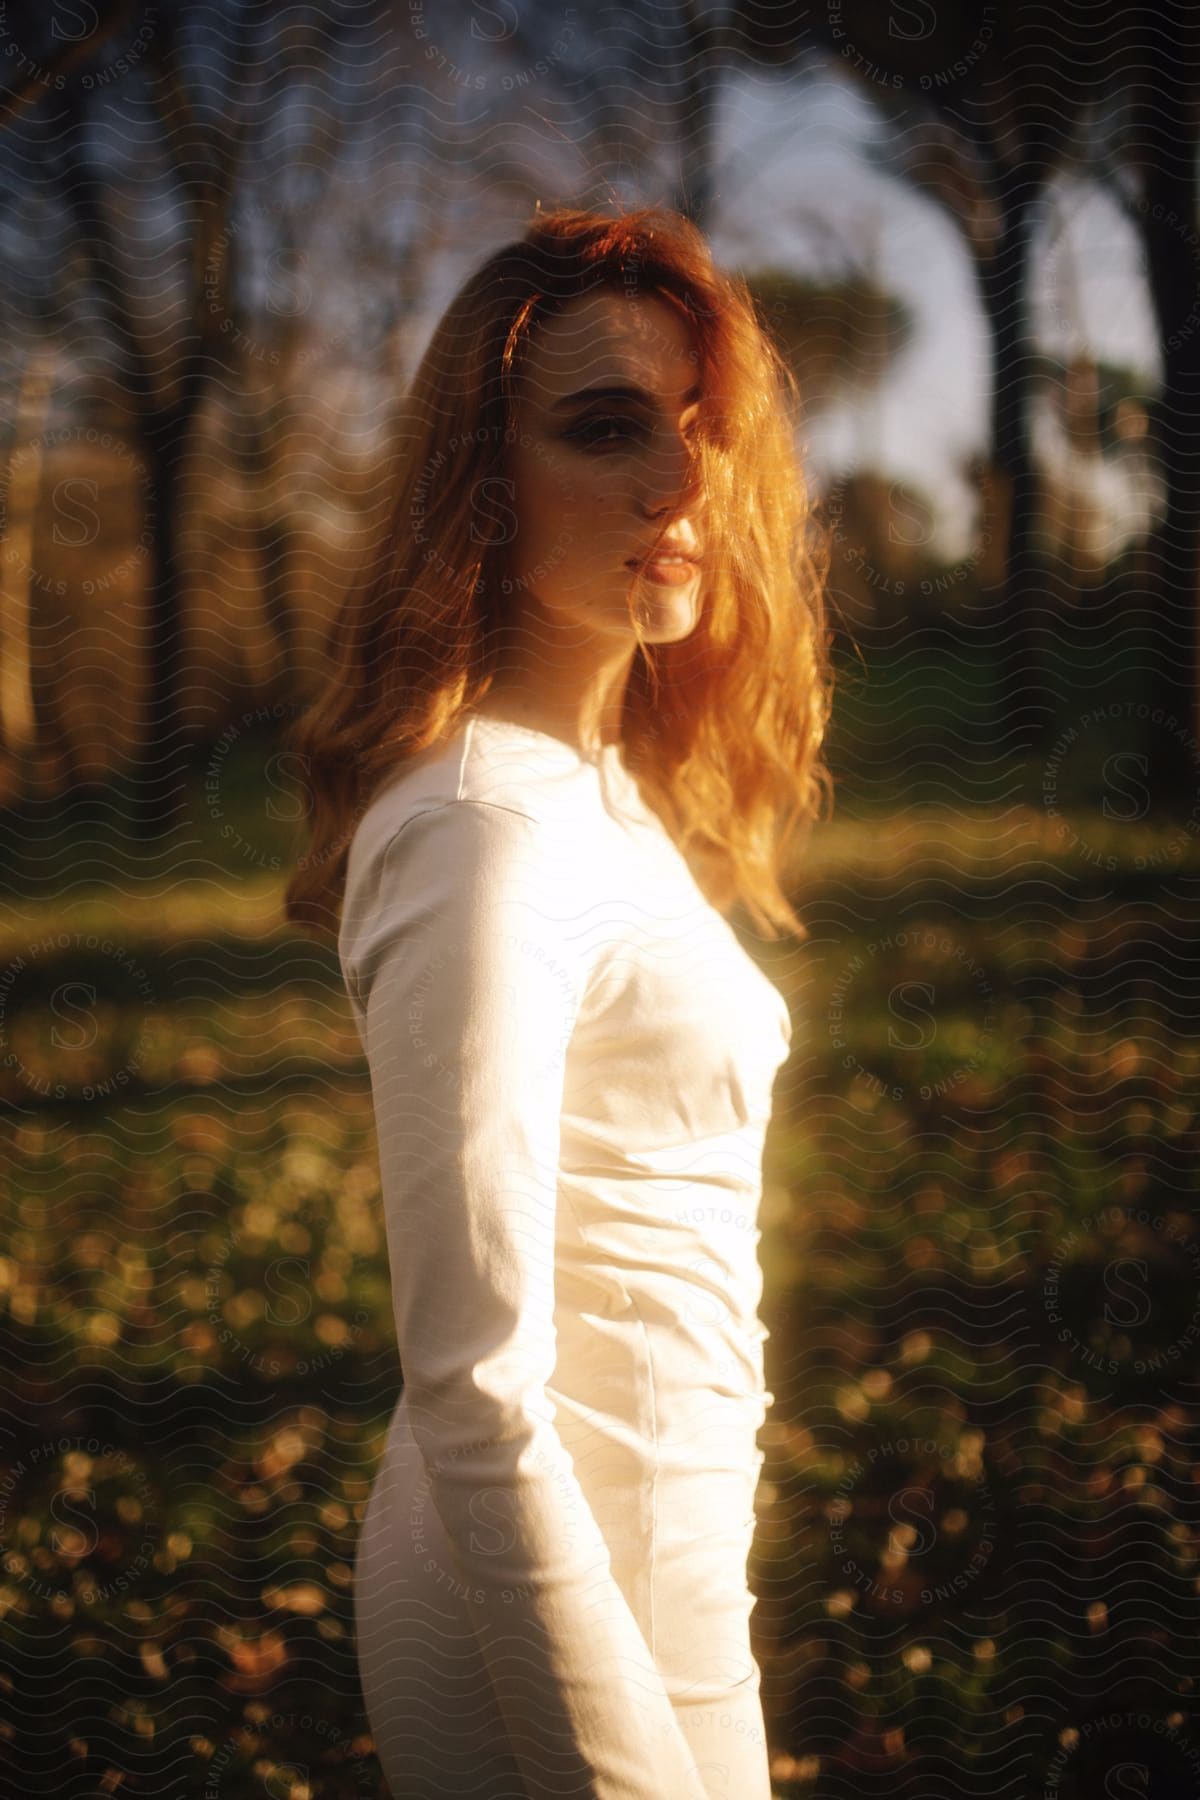 Redheaded model wearing fashionable dress stands in field.